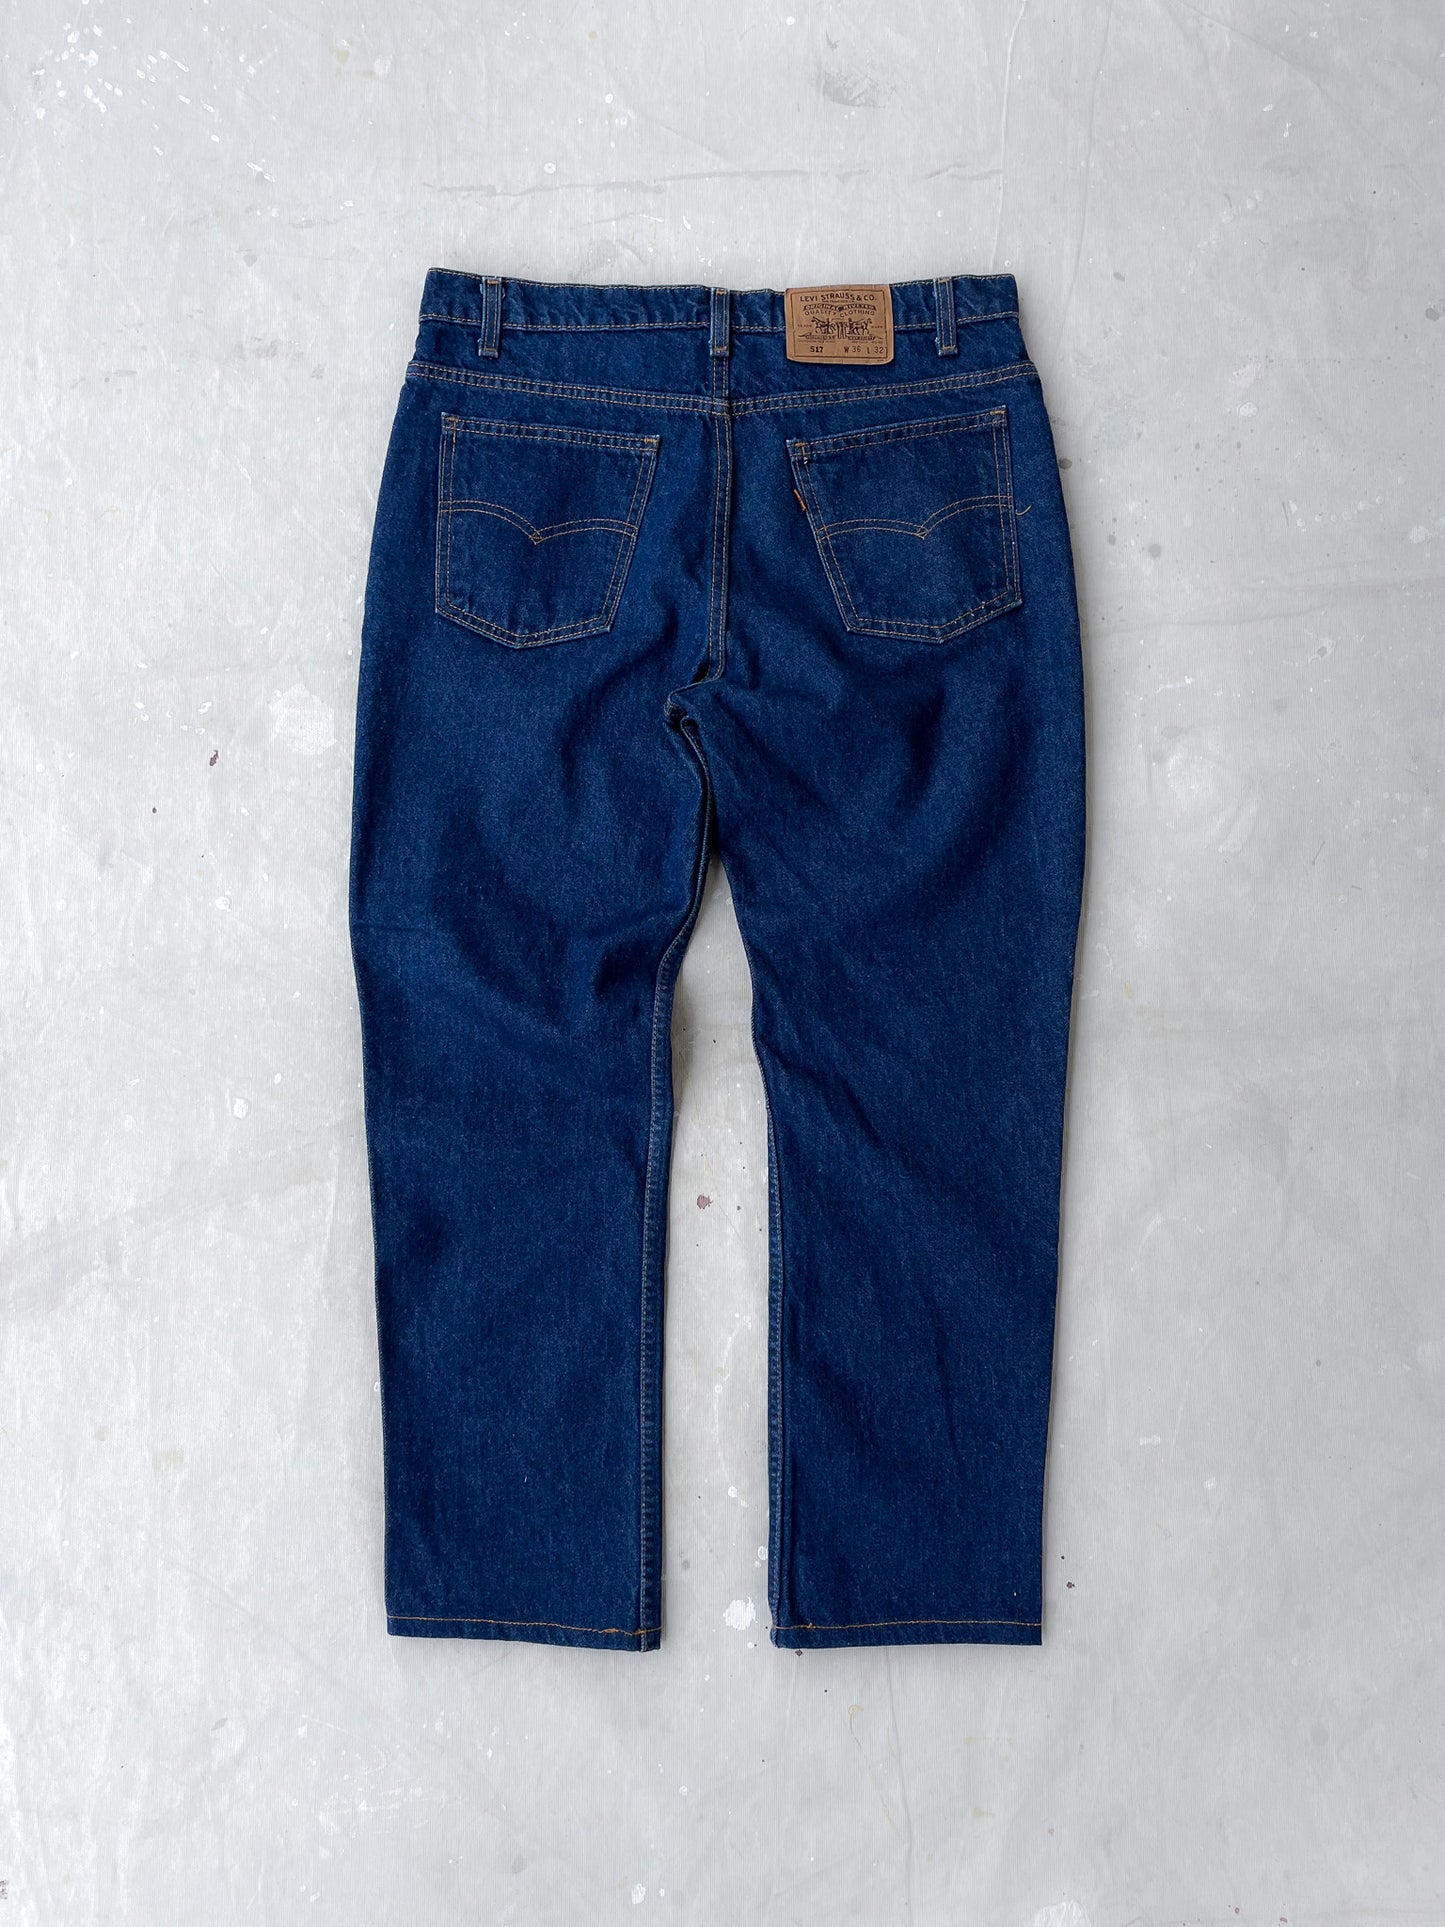 Levi’s 517 Orange Tab Jeans—[35x28]